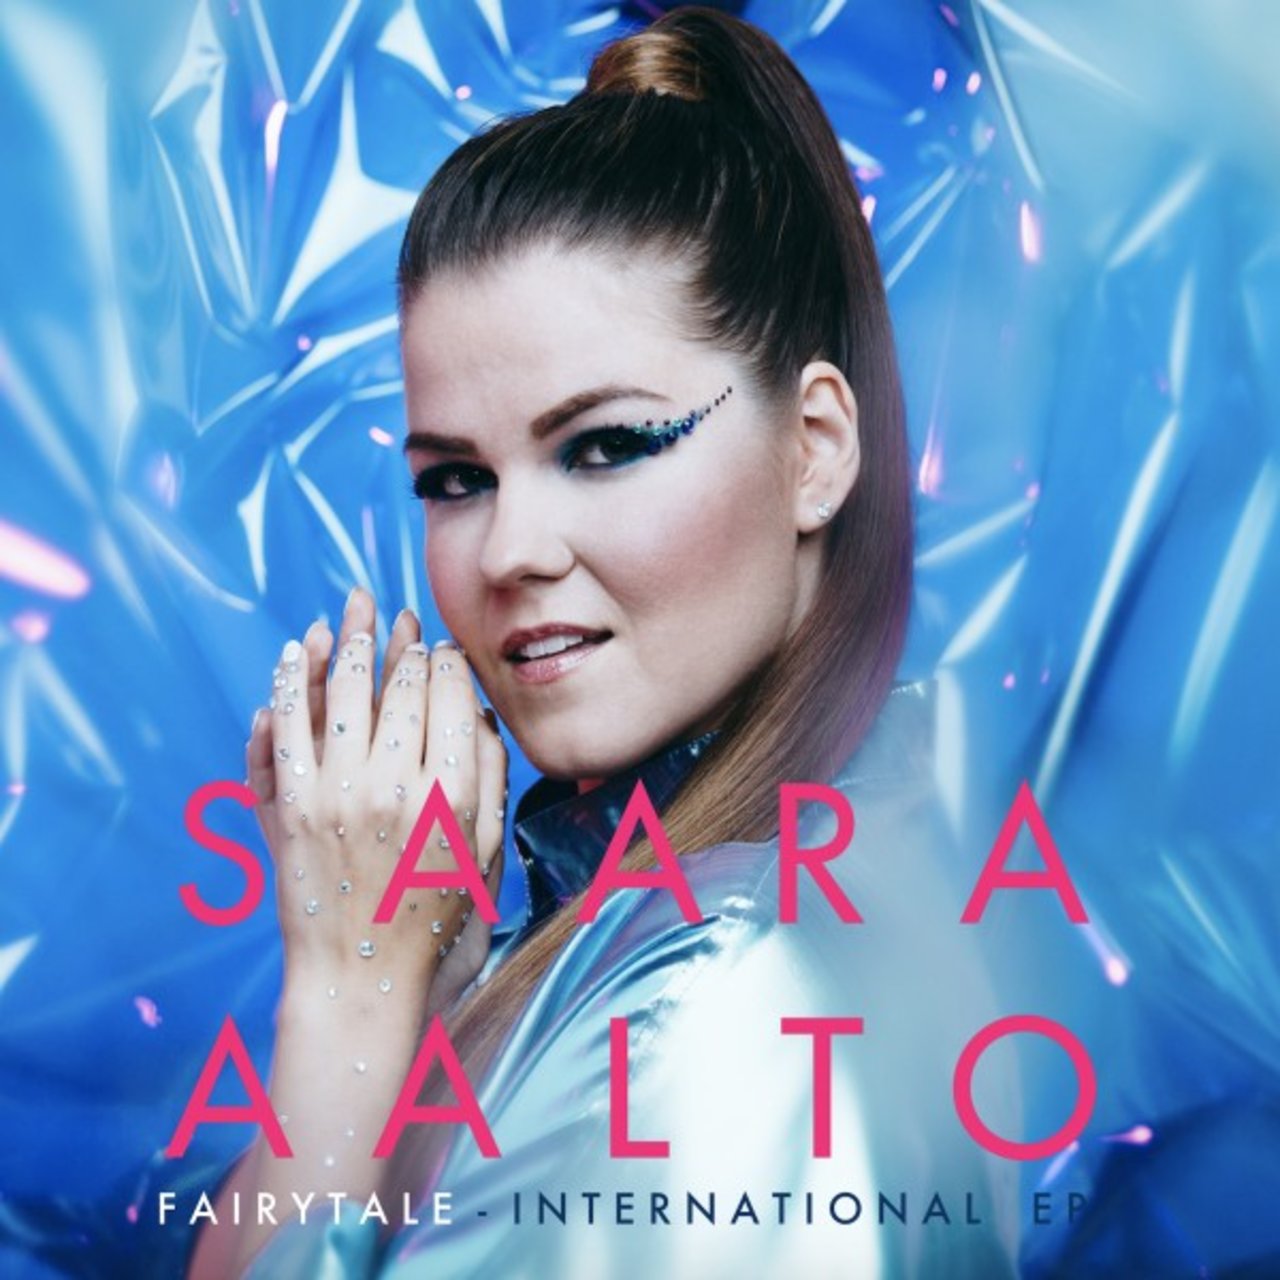 Saara Aalto Fairytale - International (EP) cover artwork